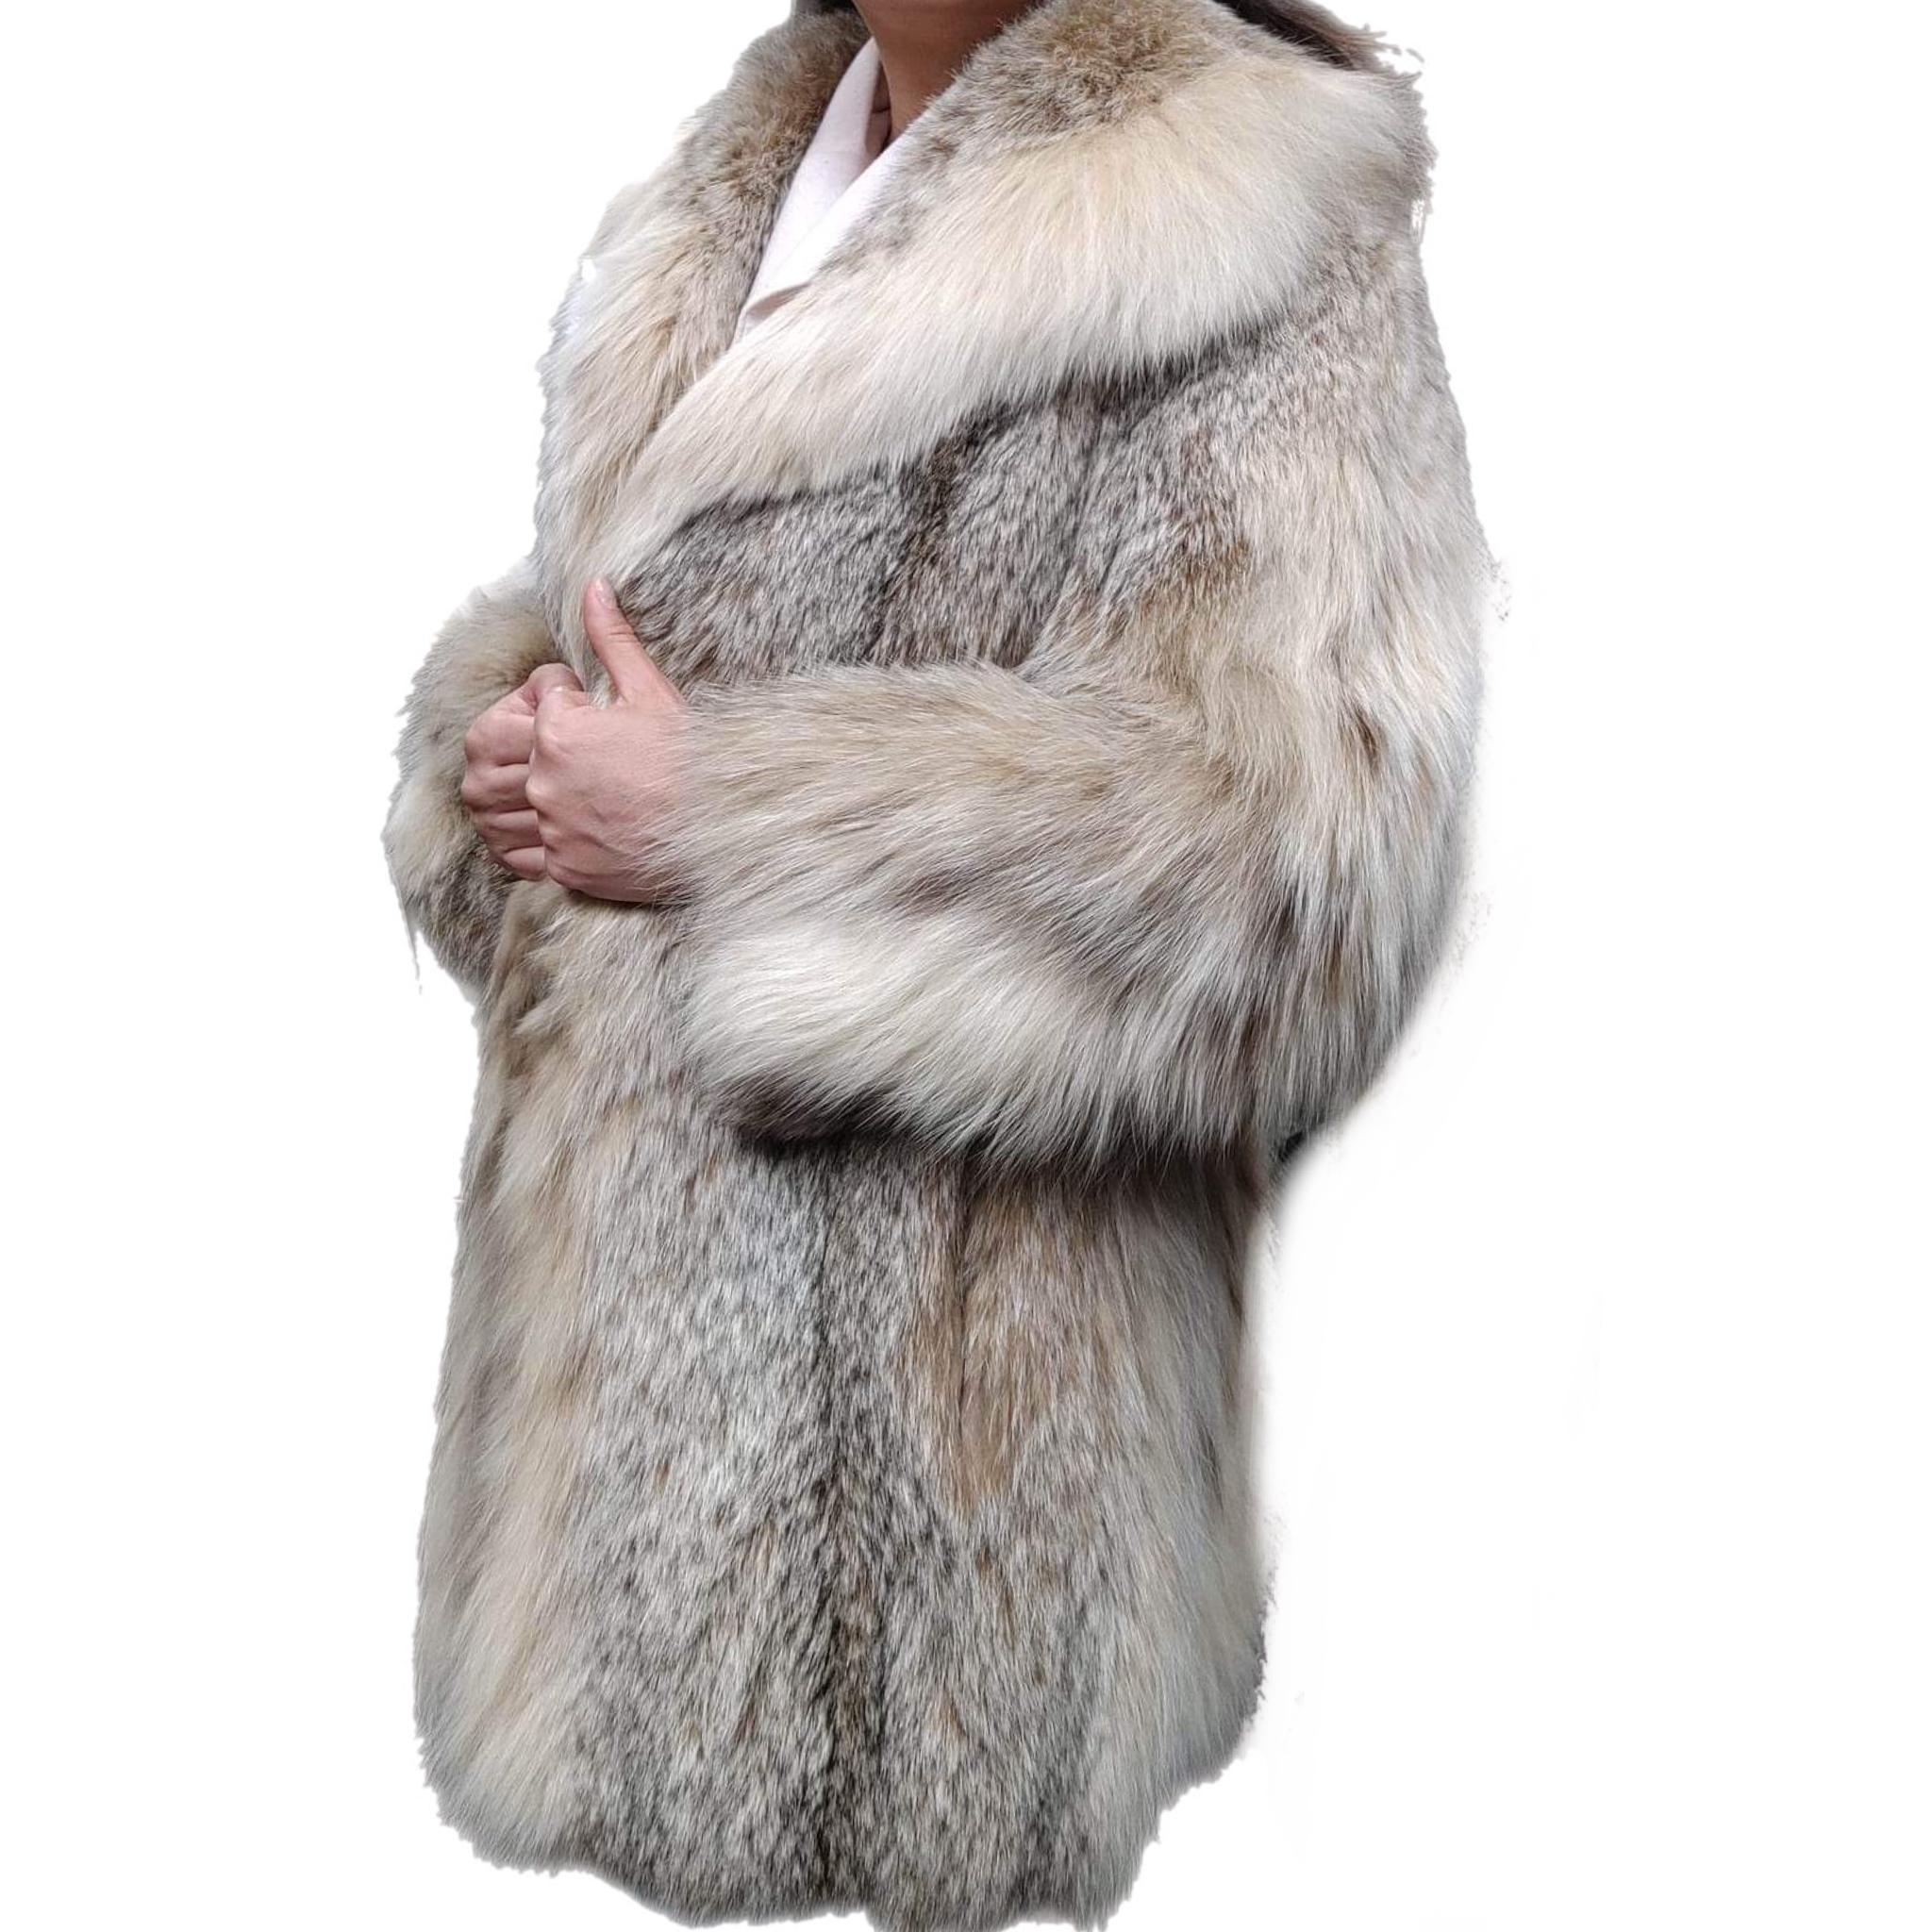 Women's Brand new lightweight lynx fur coat size 10 For Sale